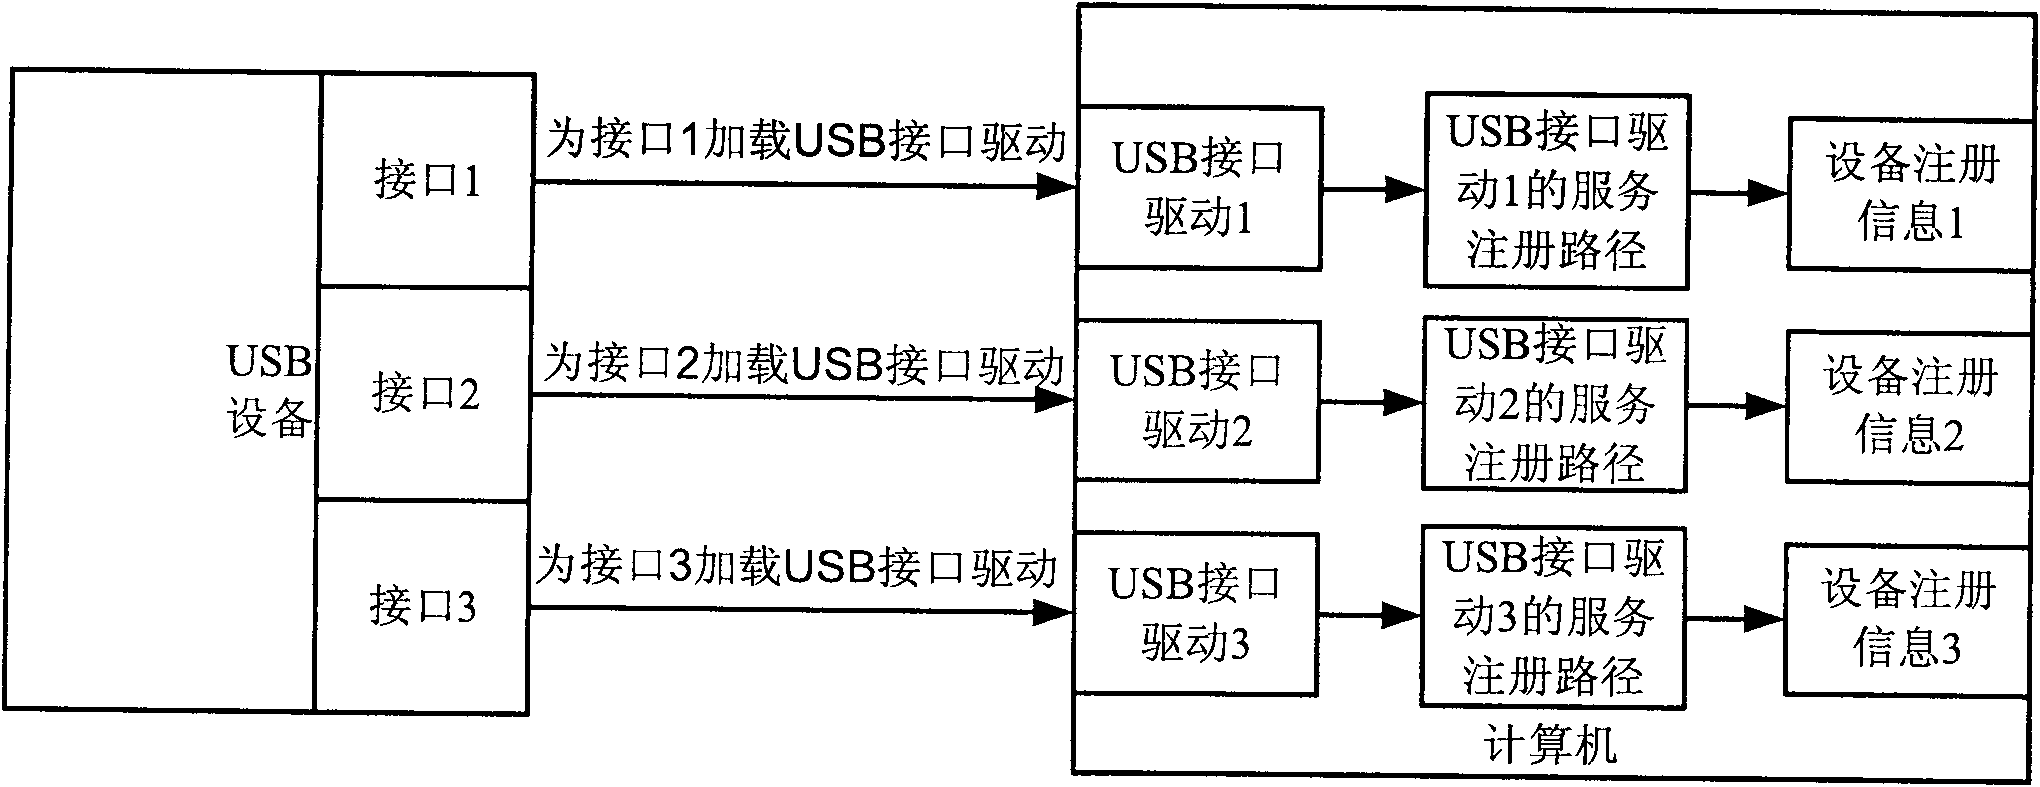 Detection method for USB to virtual serial port/MODEM